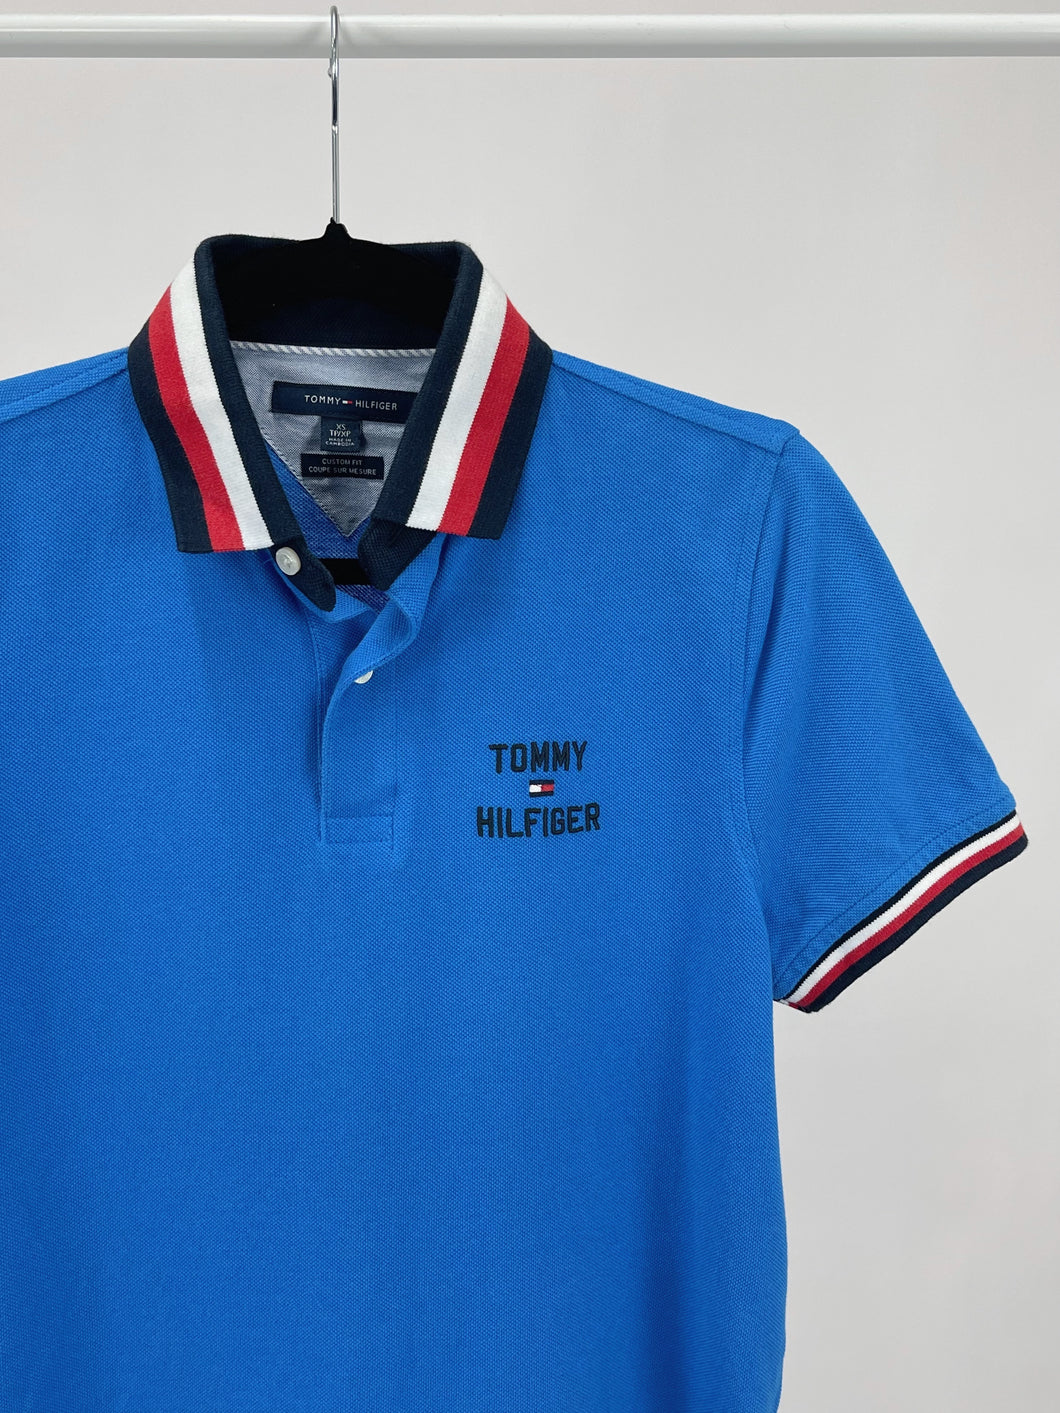 Tommy Hilfiger Blue Polo Shirt (XS)